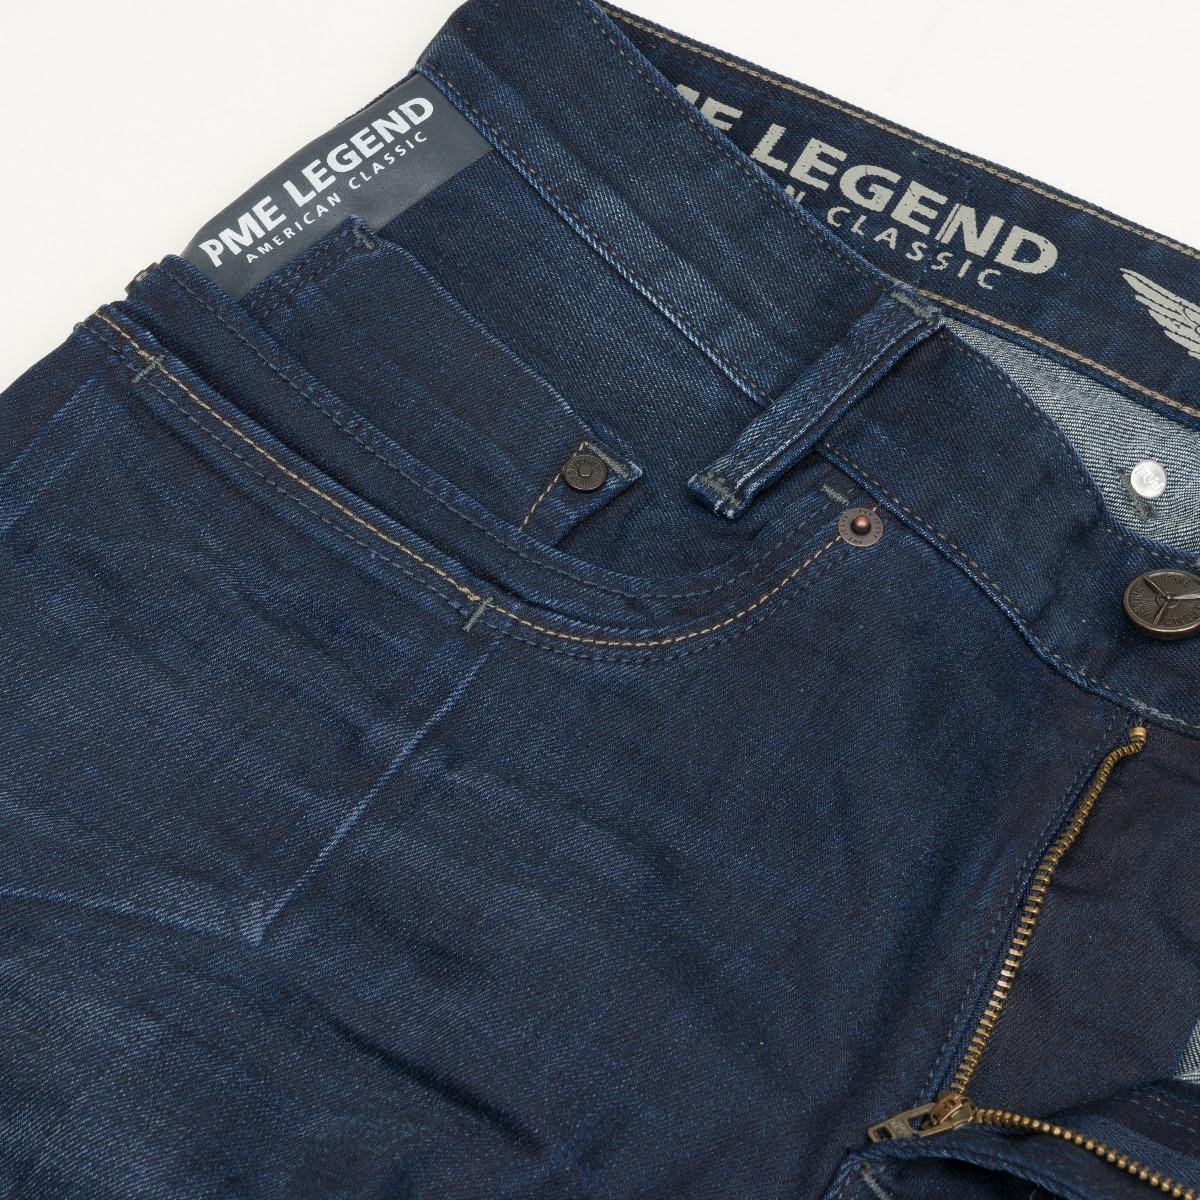 PME Legend - Heren Jeans Skymaster Jeans Stretch Dark - Blauw - Maat 30/34  | bol.com